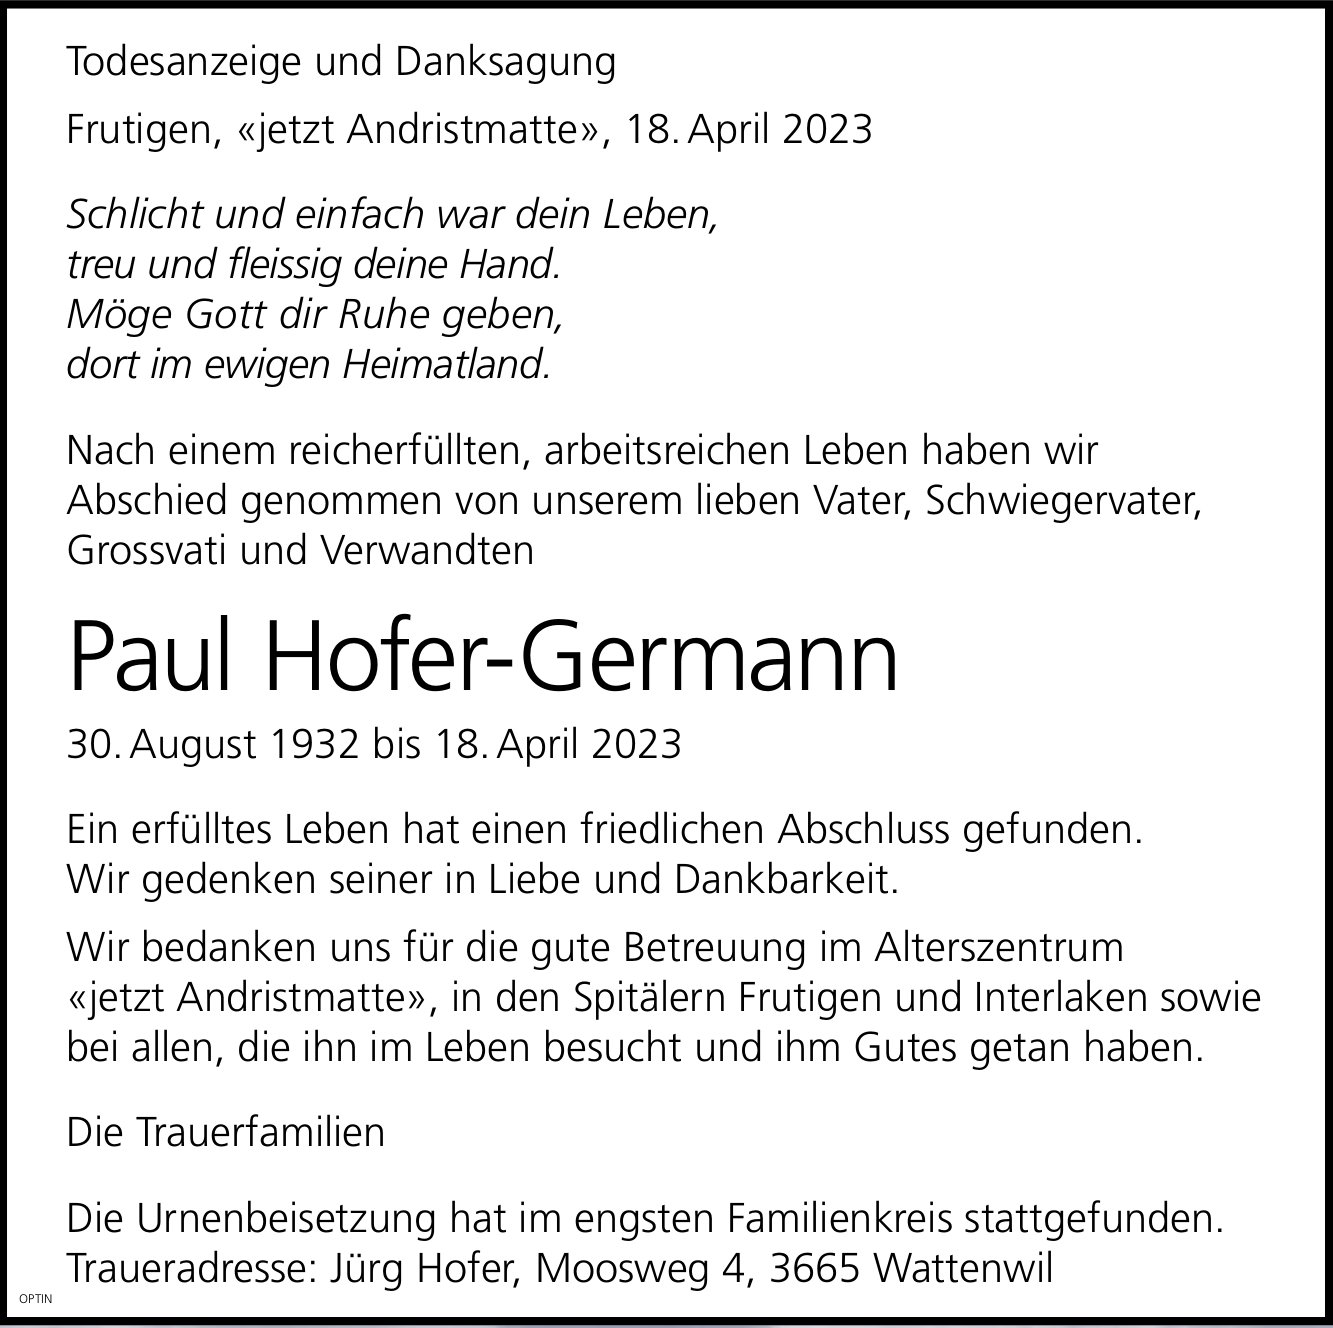 PaulHofer-Germann, April 2023 / TA